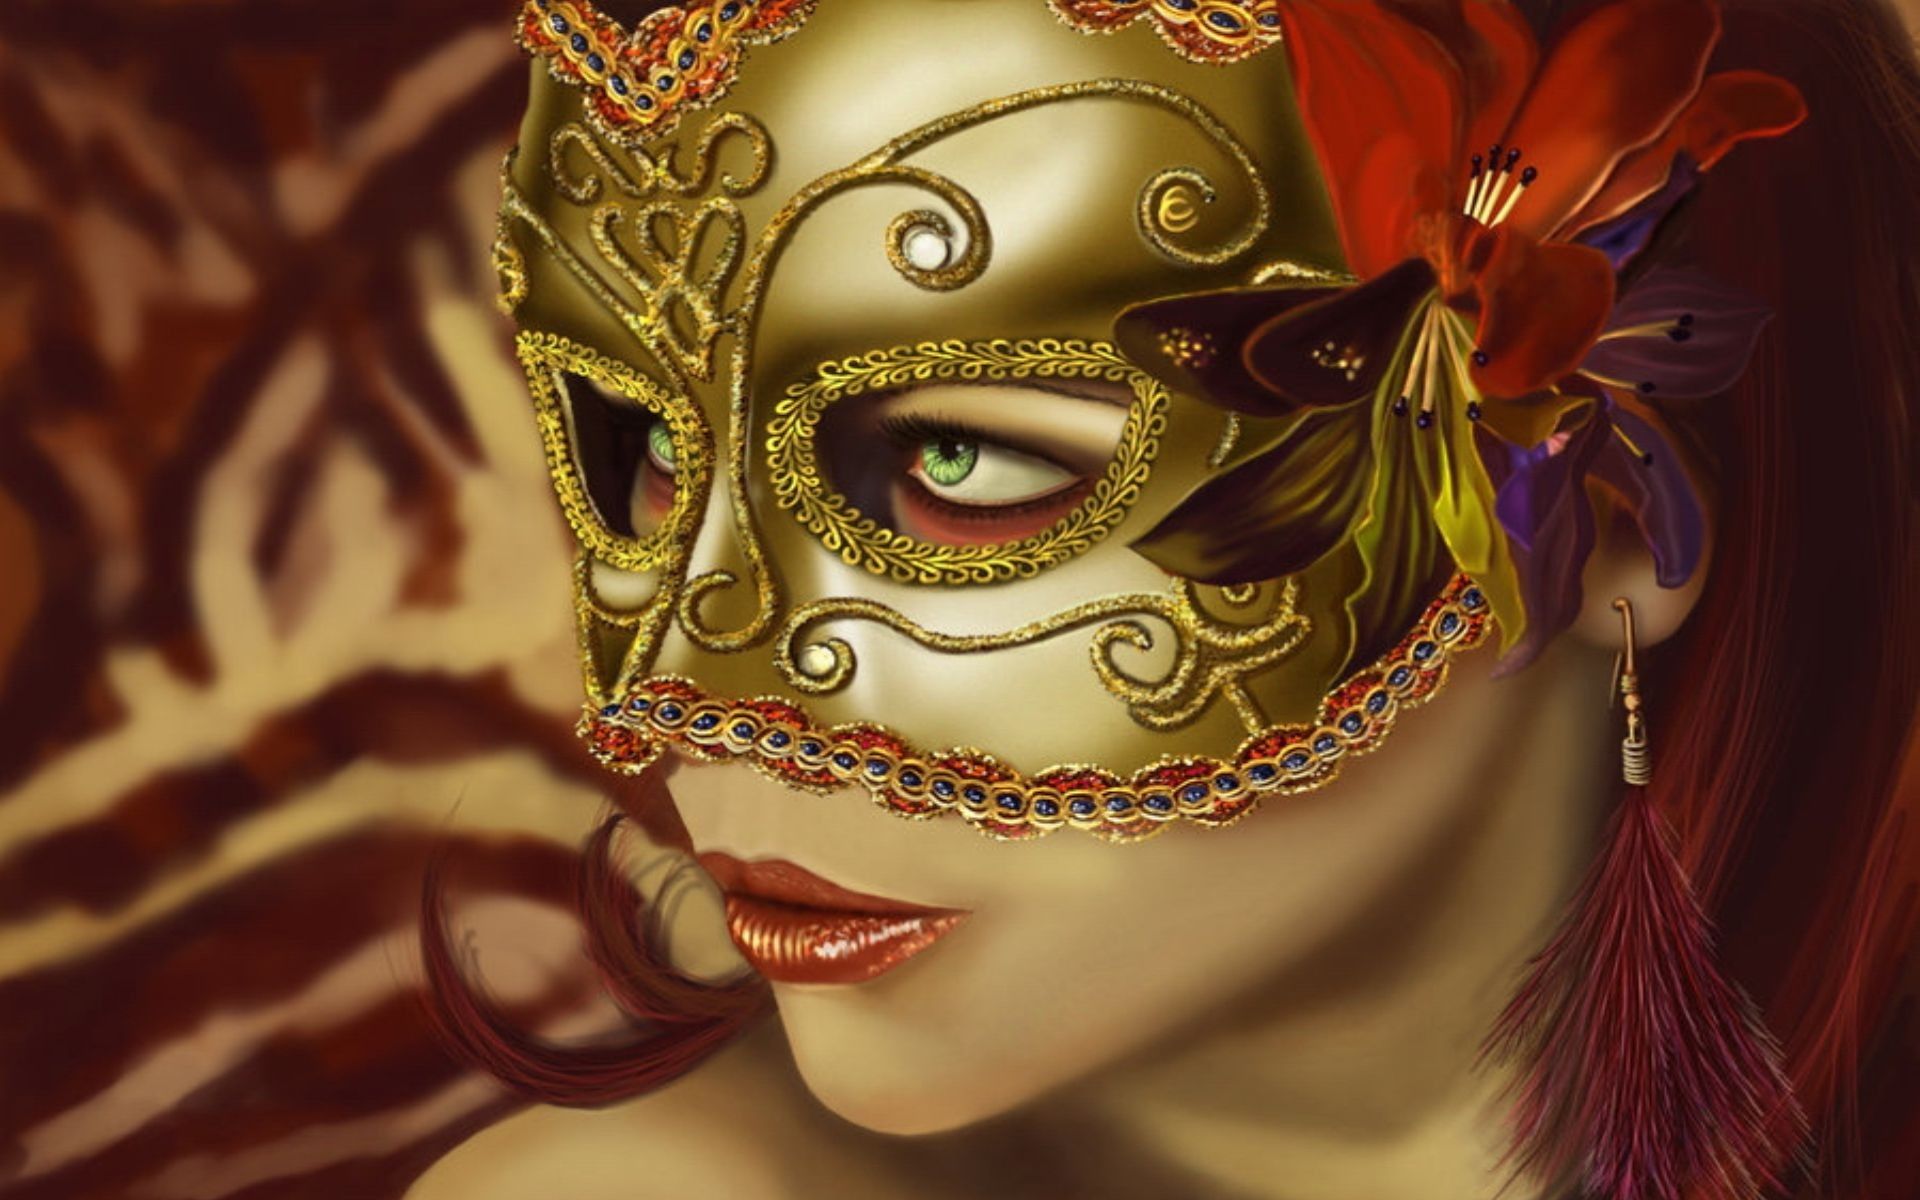 women, green eyes, fantasy art, masks, artwork, faces, fans, photohop edit, Venetian masks wallpaper